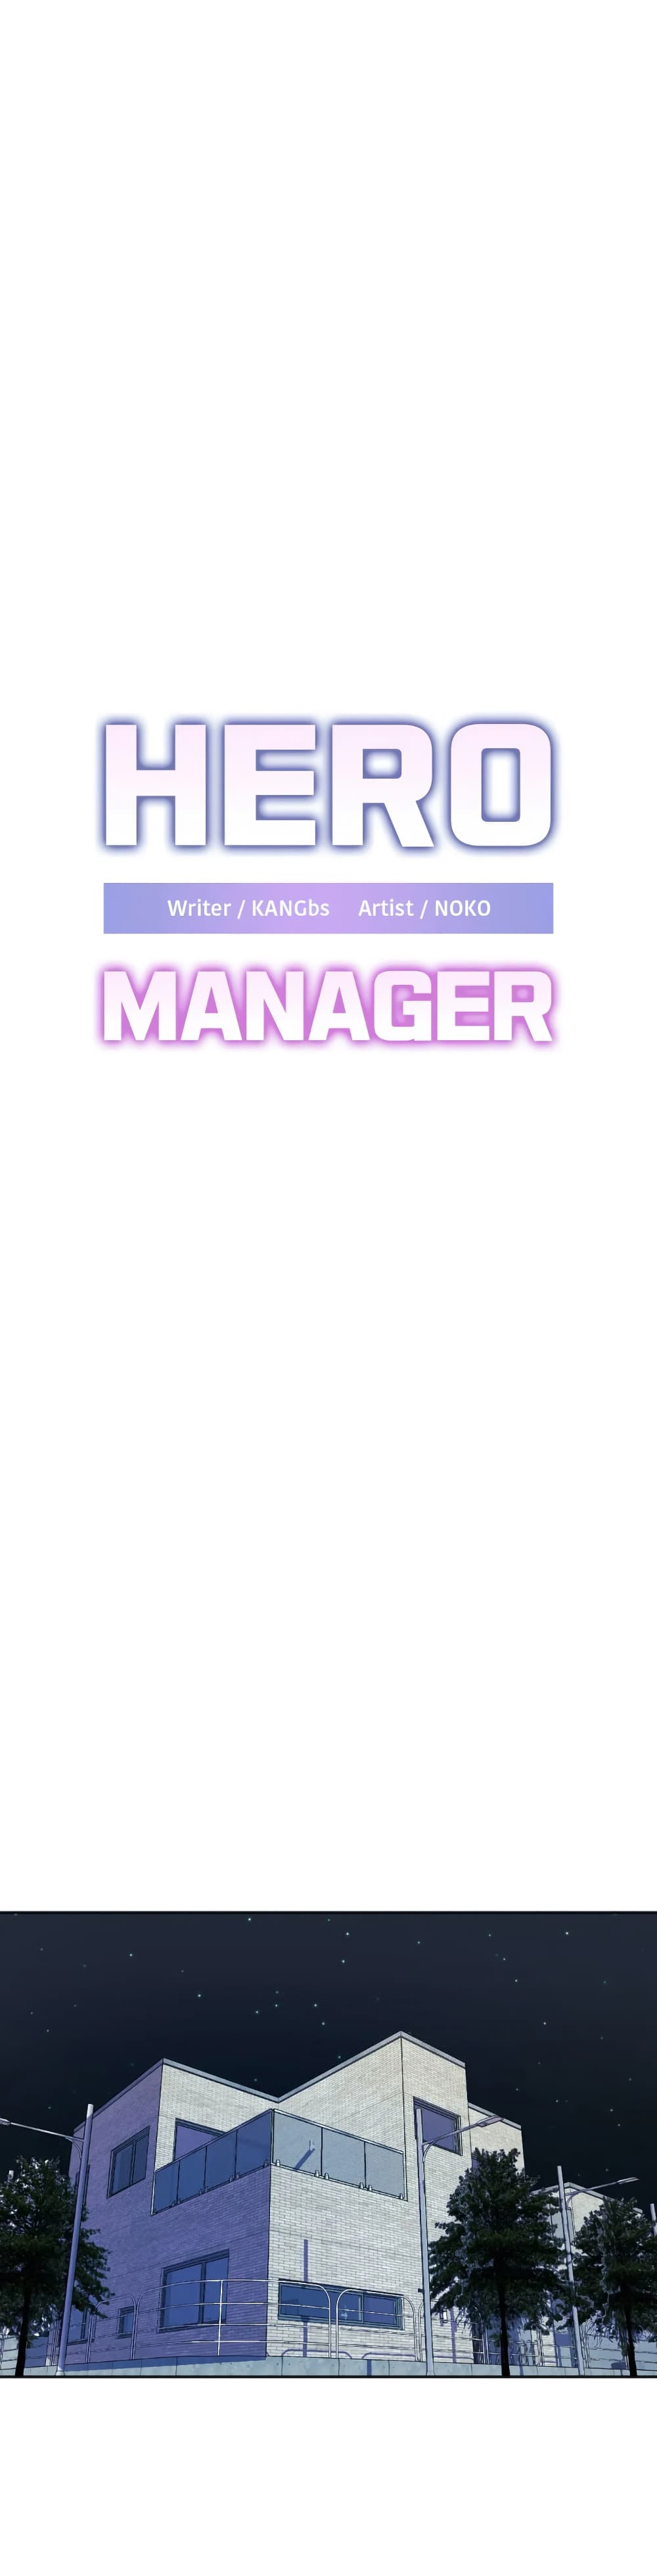 Hero Manager 16-16